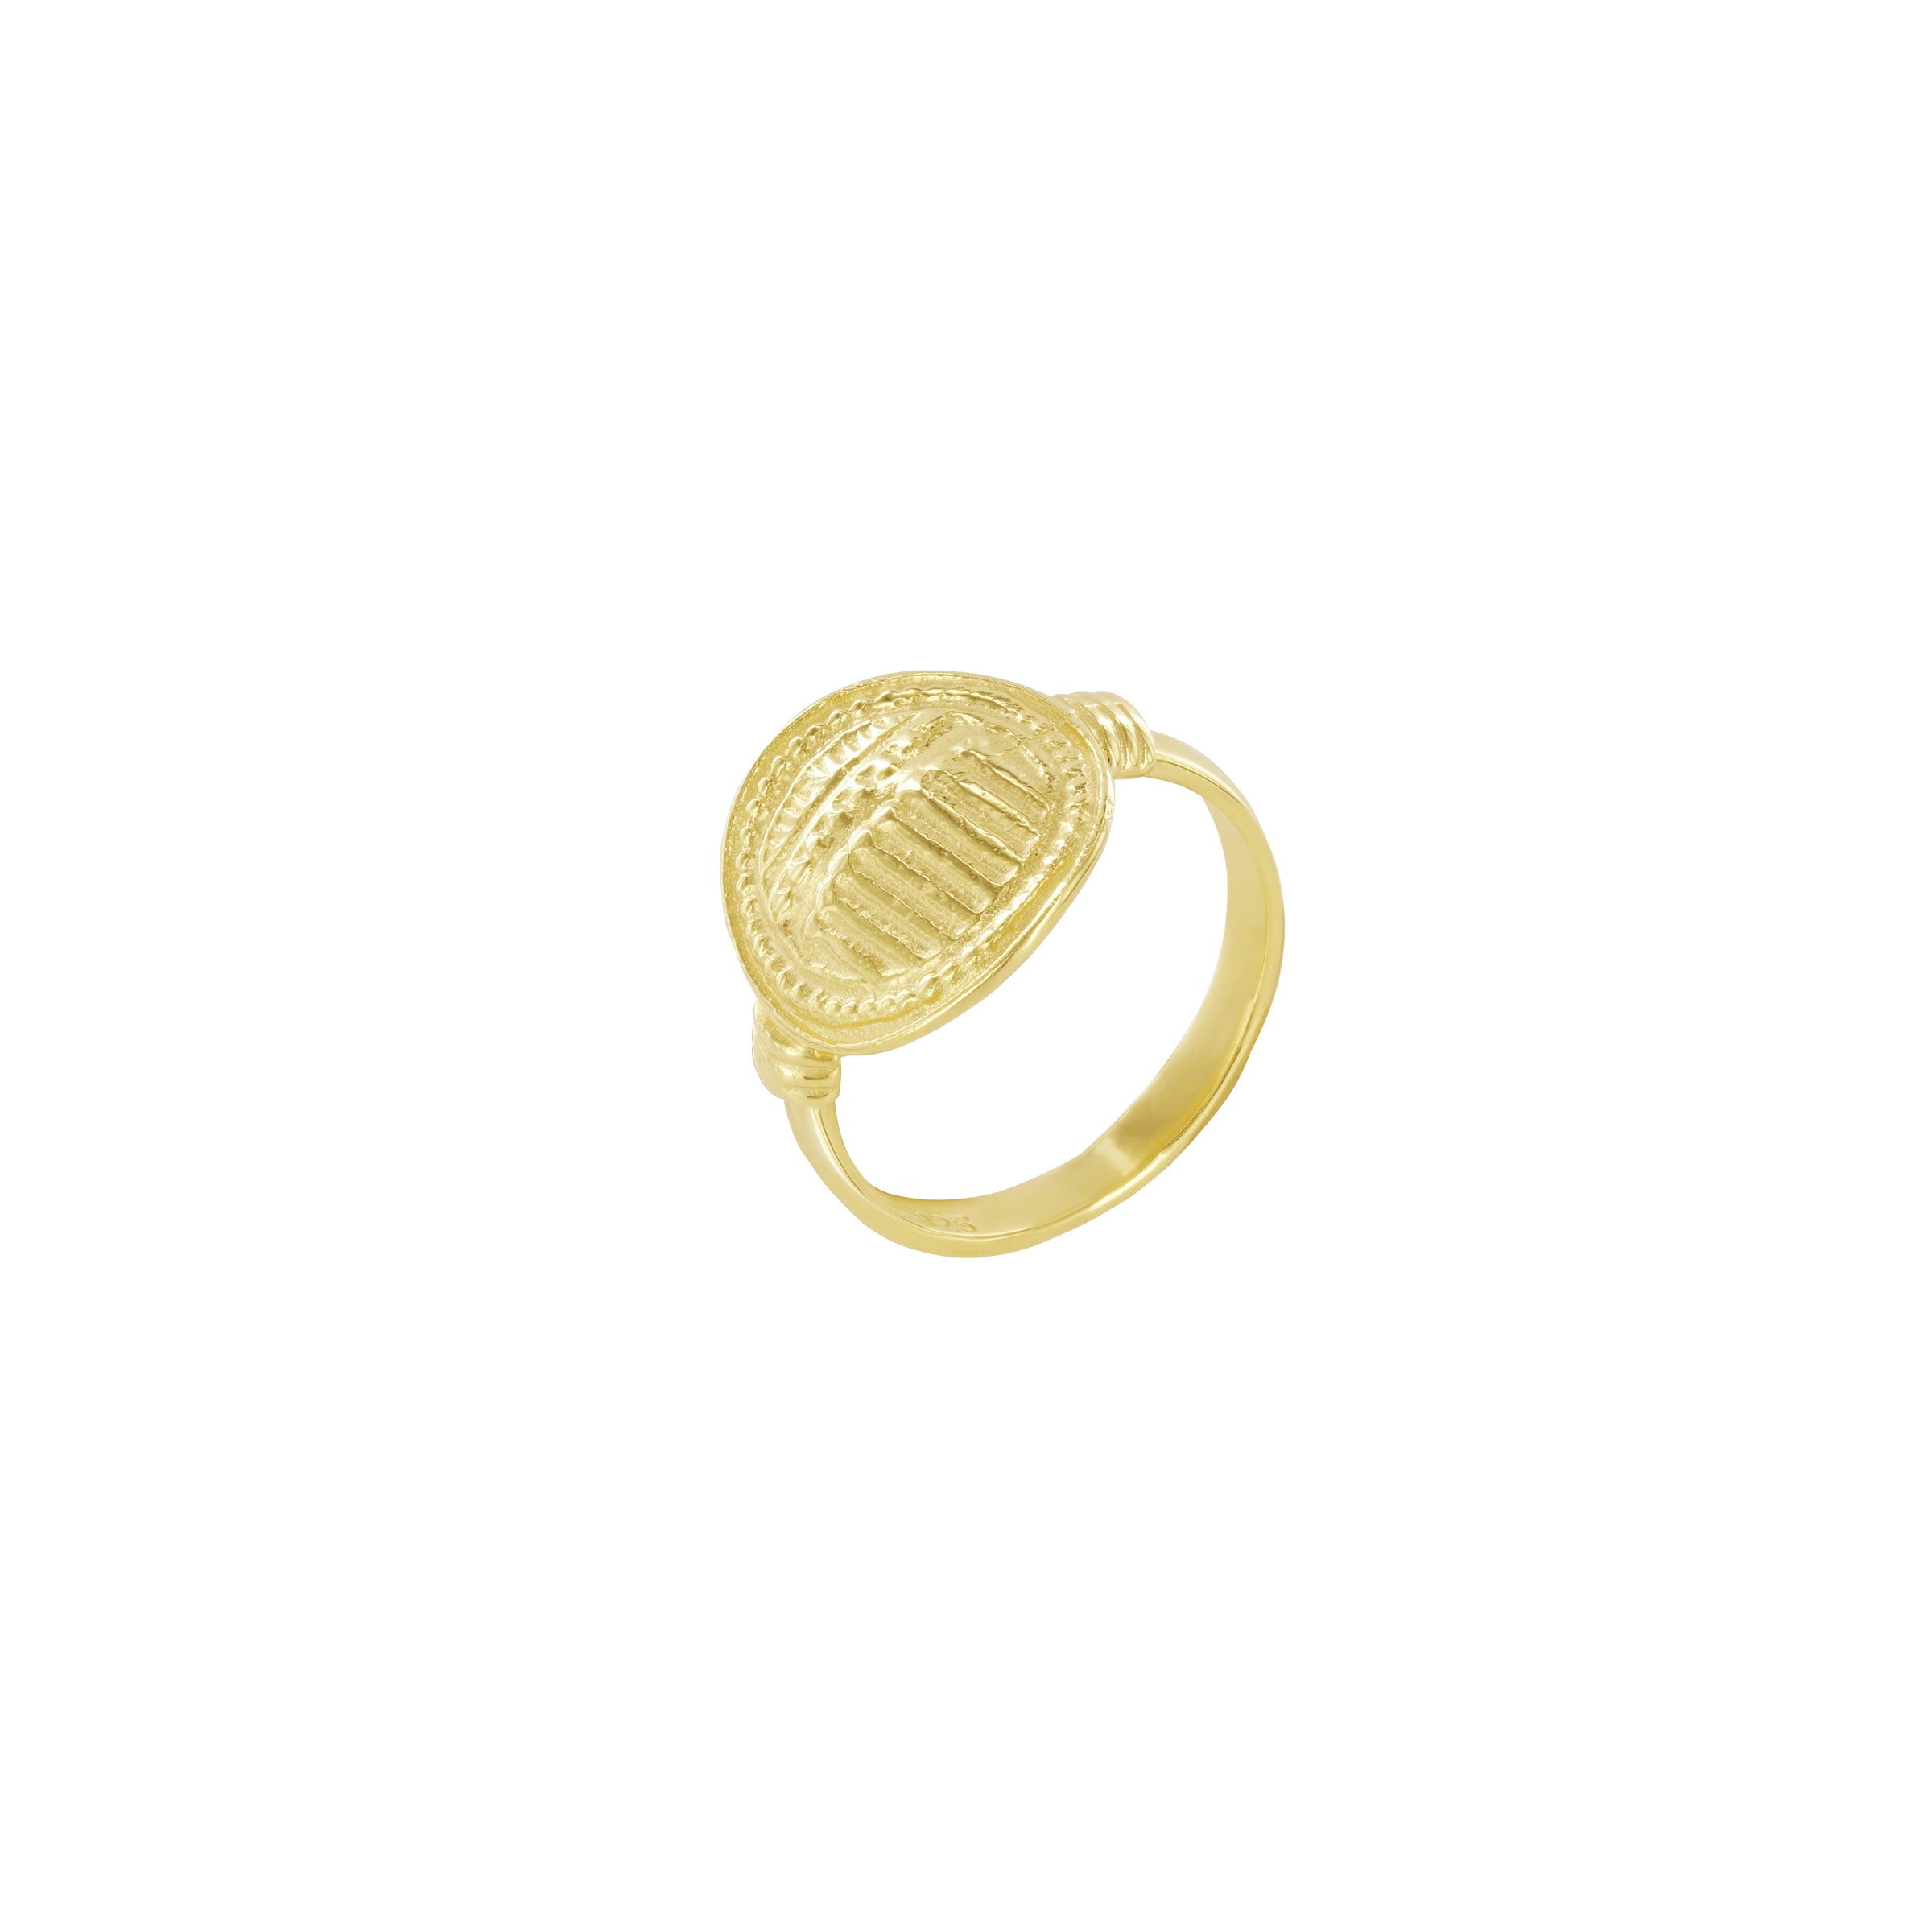 Artemis Ring Gold Vermeil